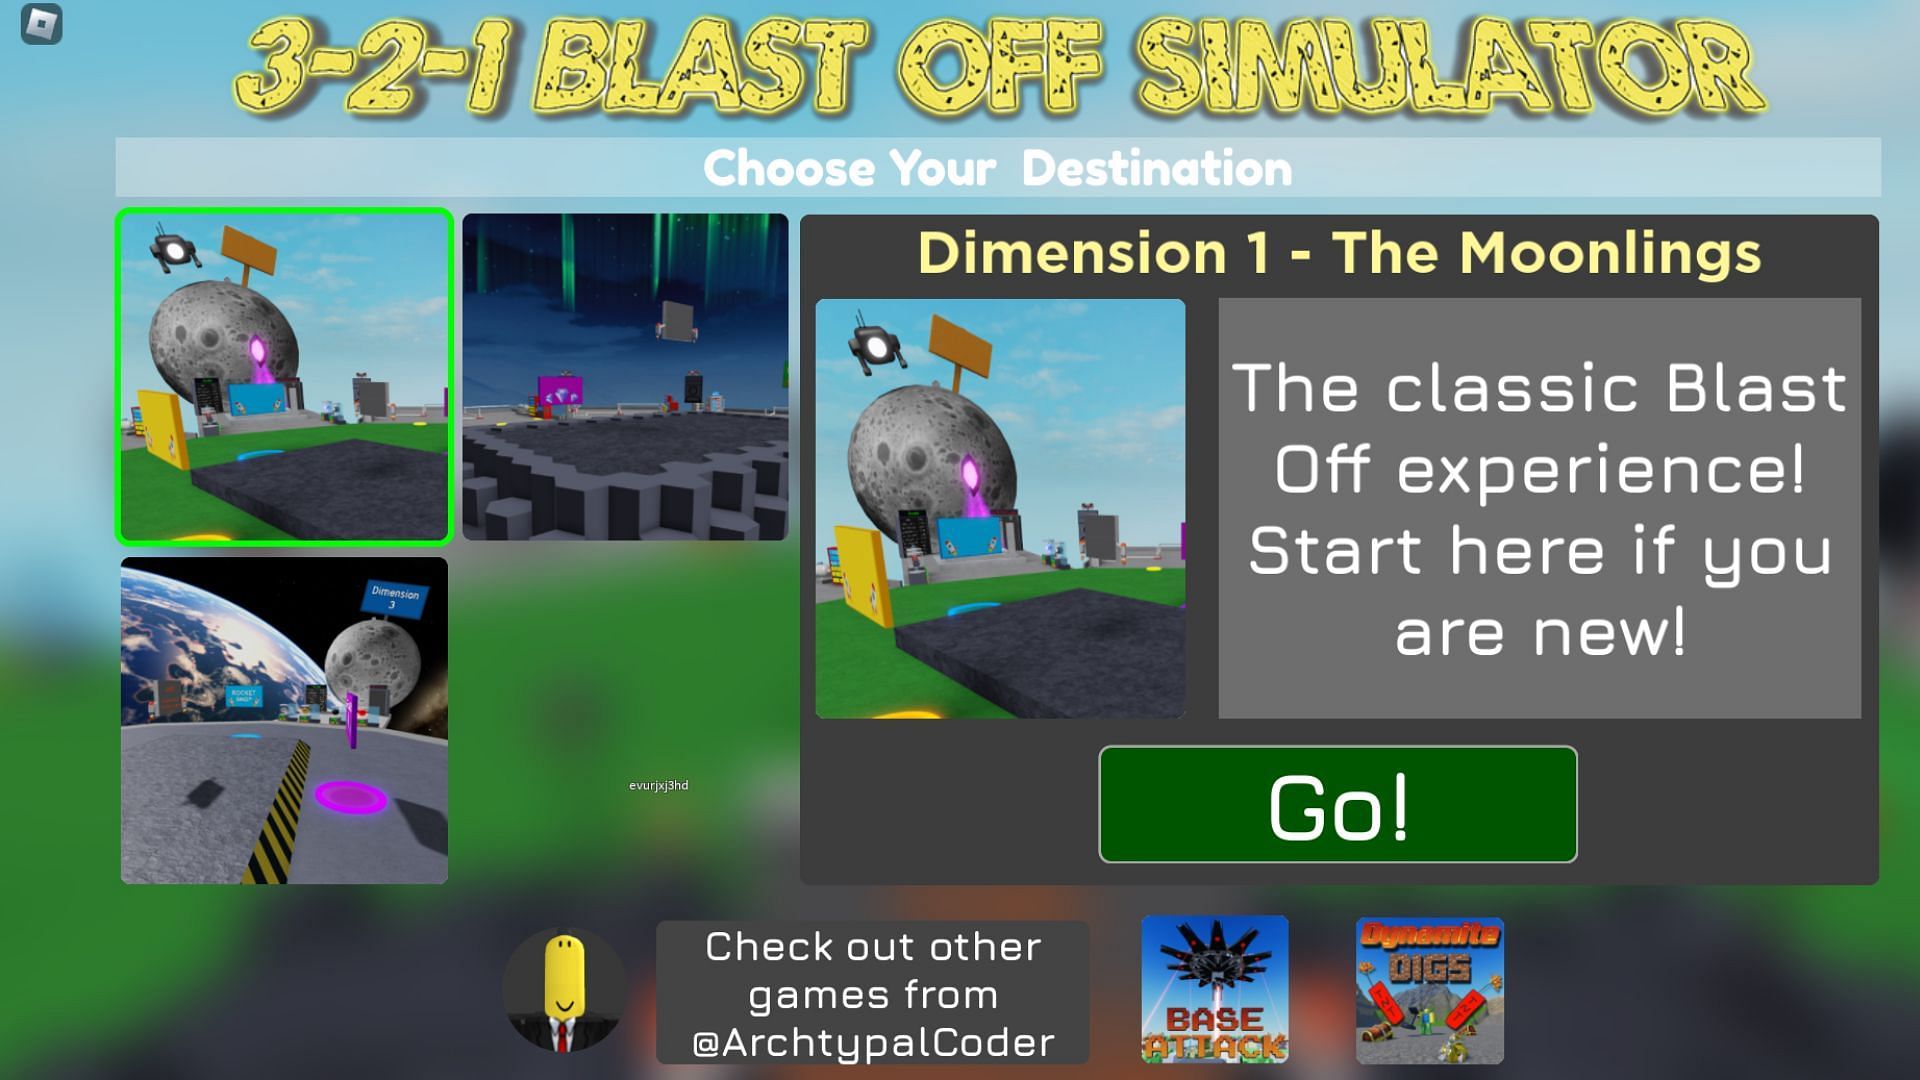 Different destinations in 3-2-1 Blast Off Simulator (Image via Roblox)